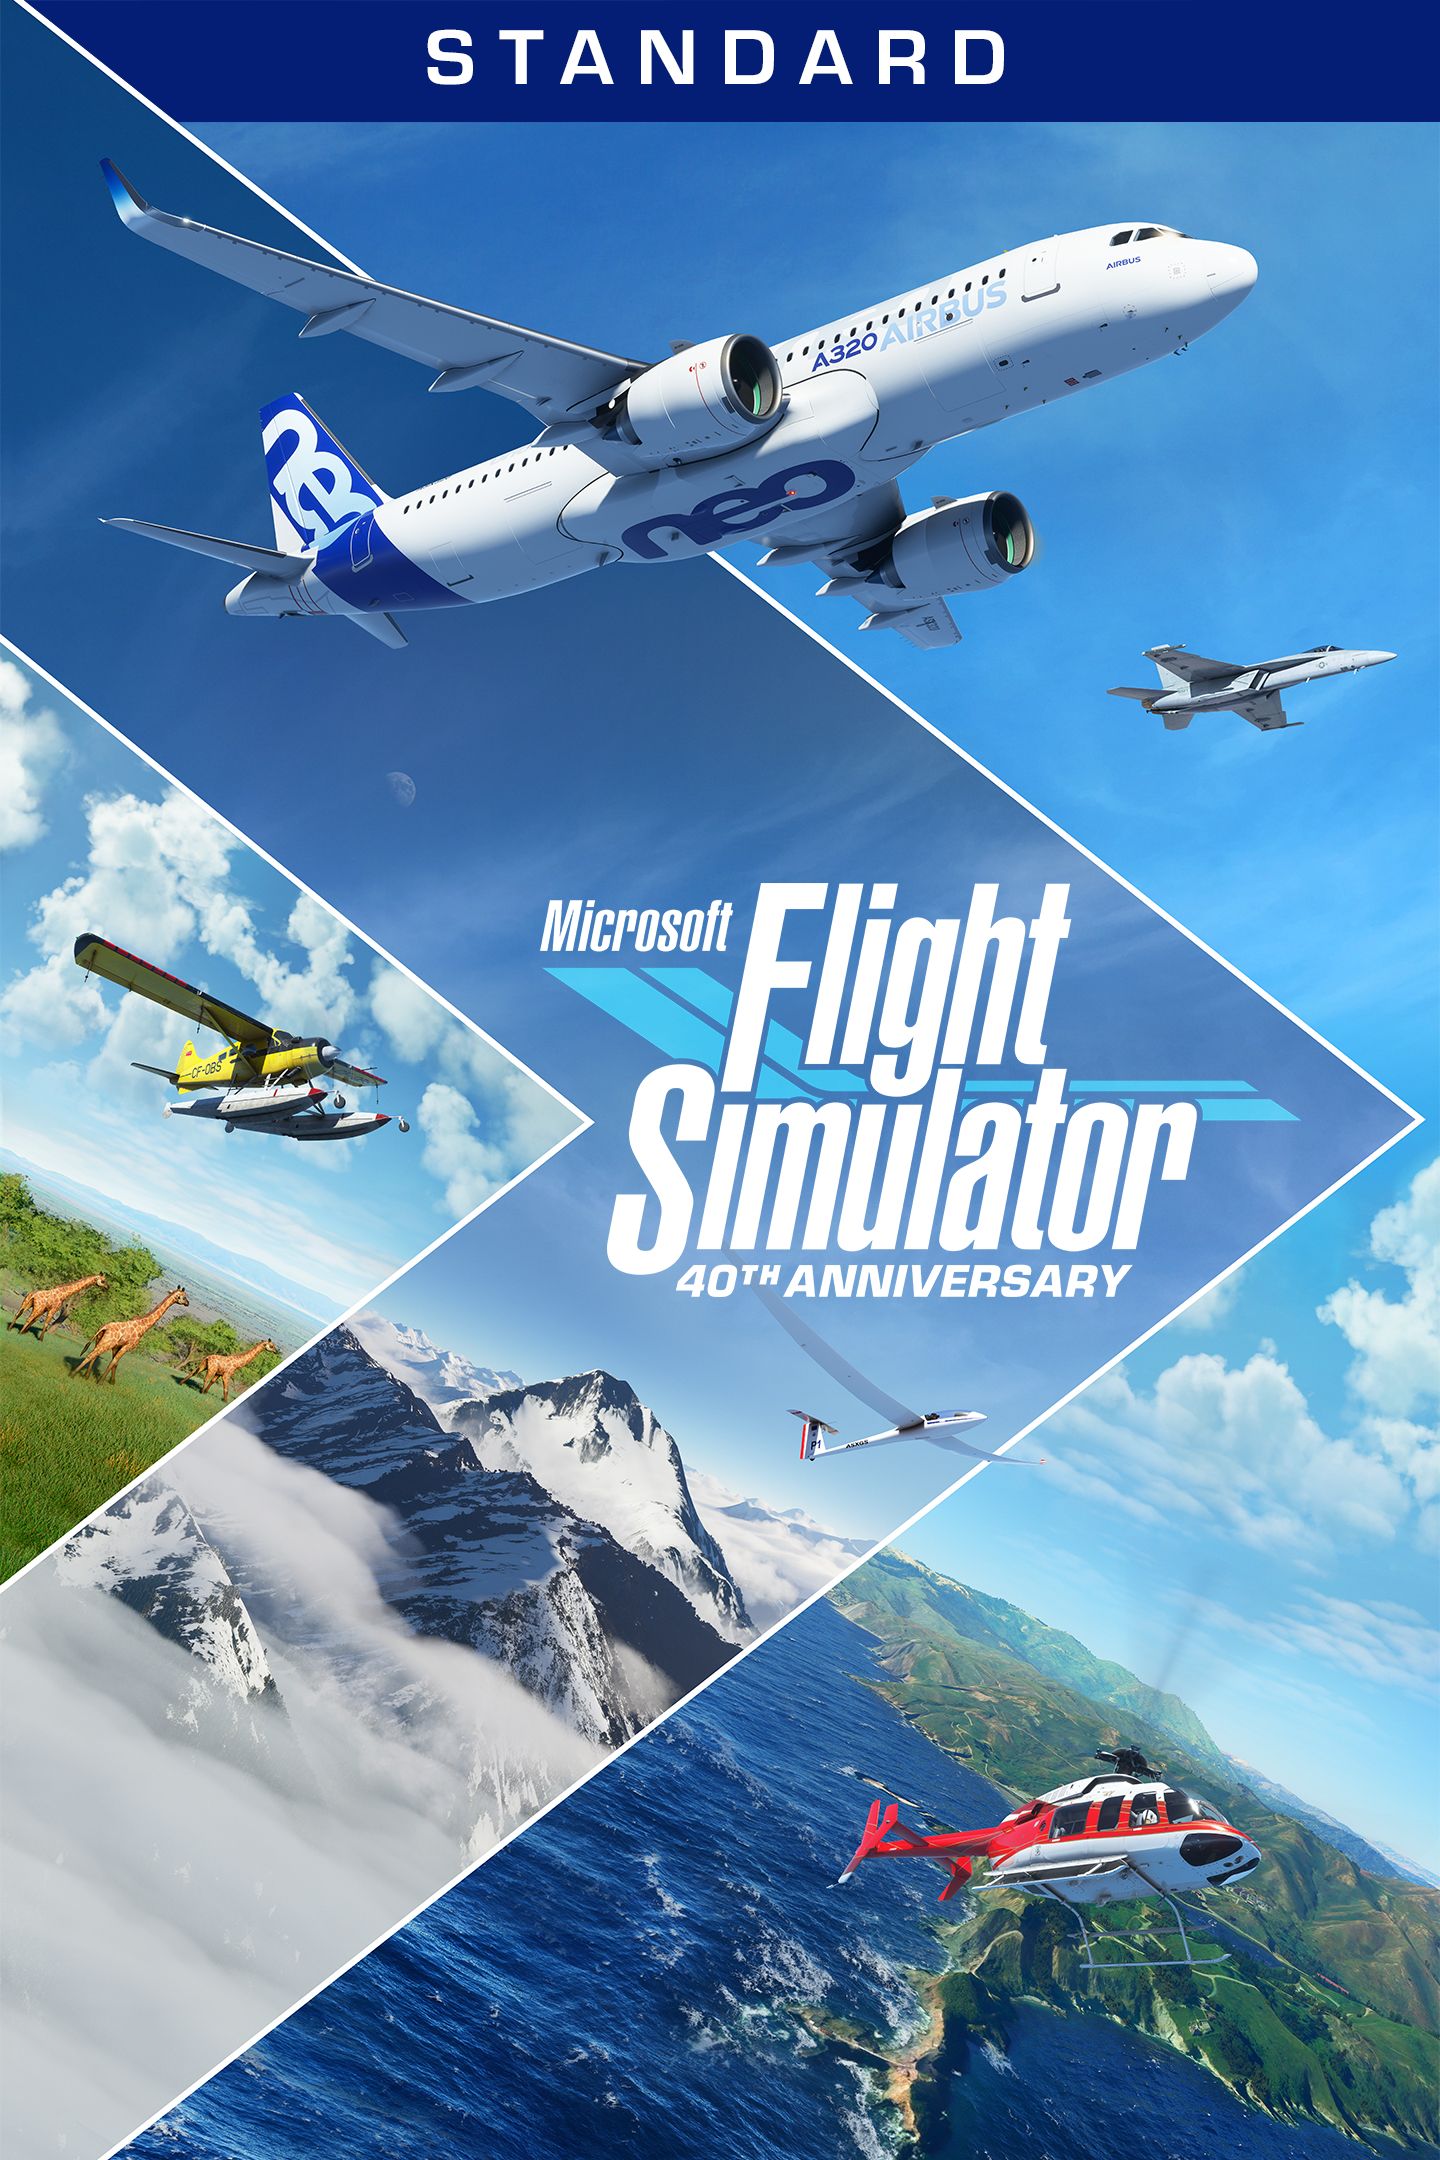 How to Unlock Halo Ships in Microsoft Flight Simulator